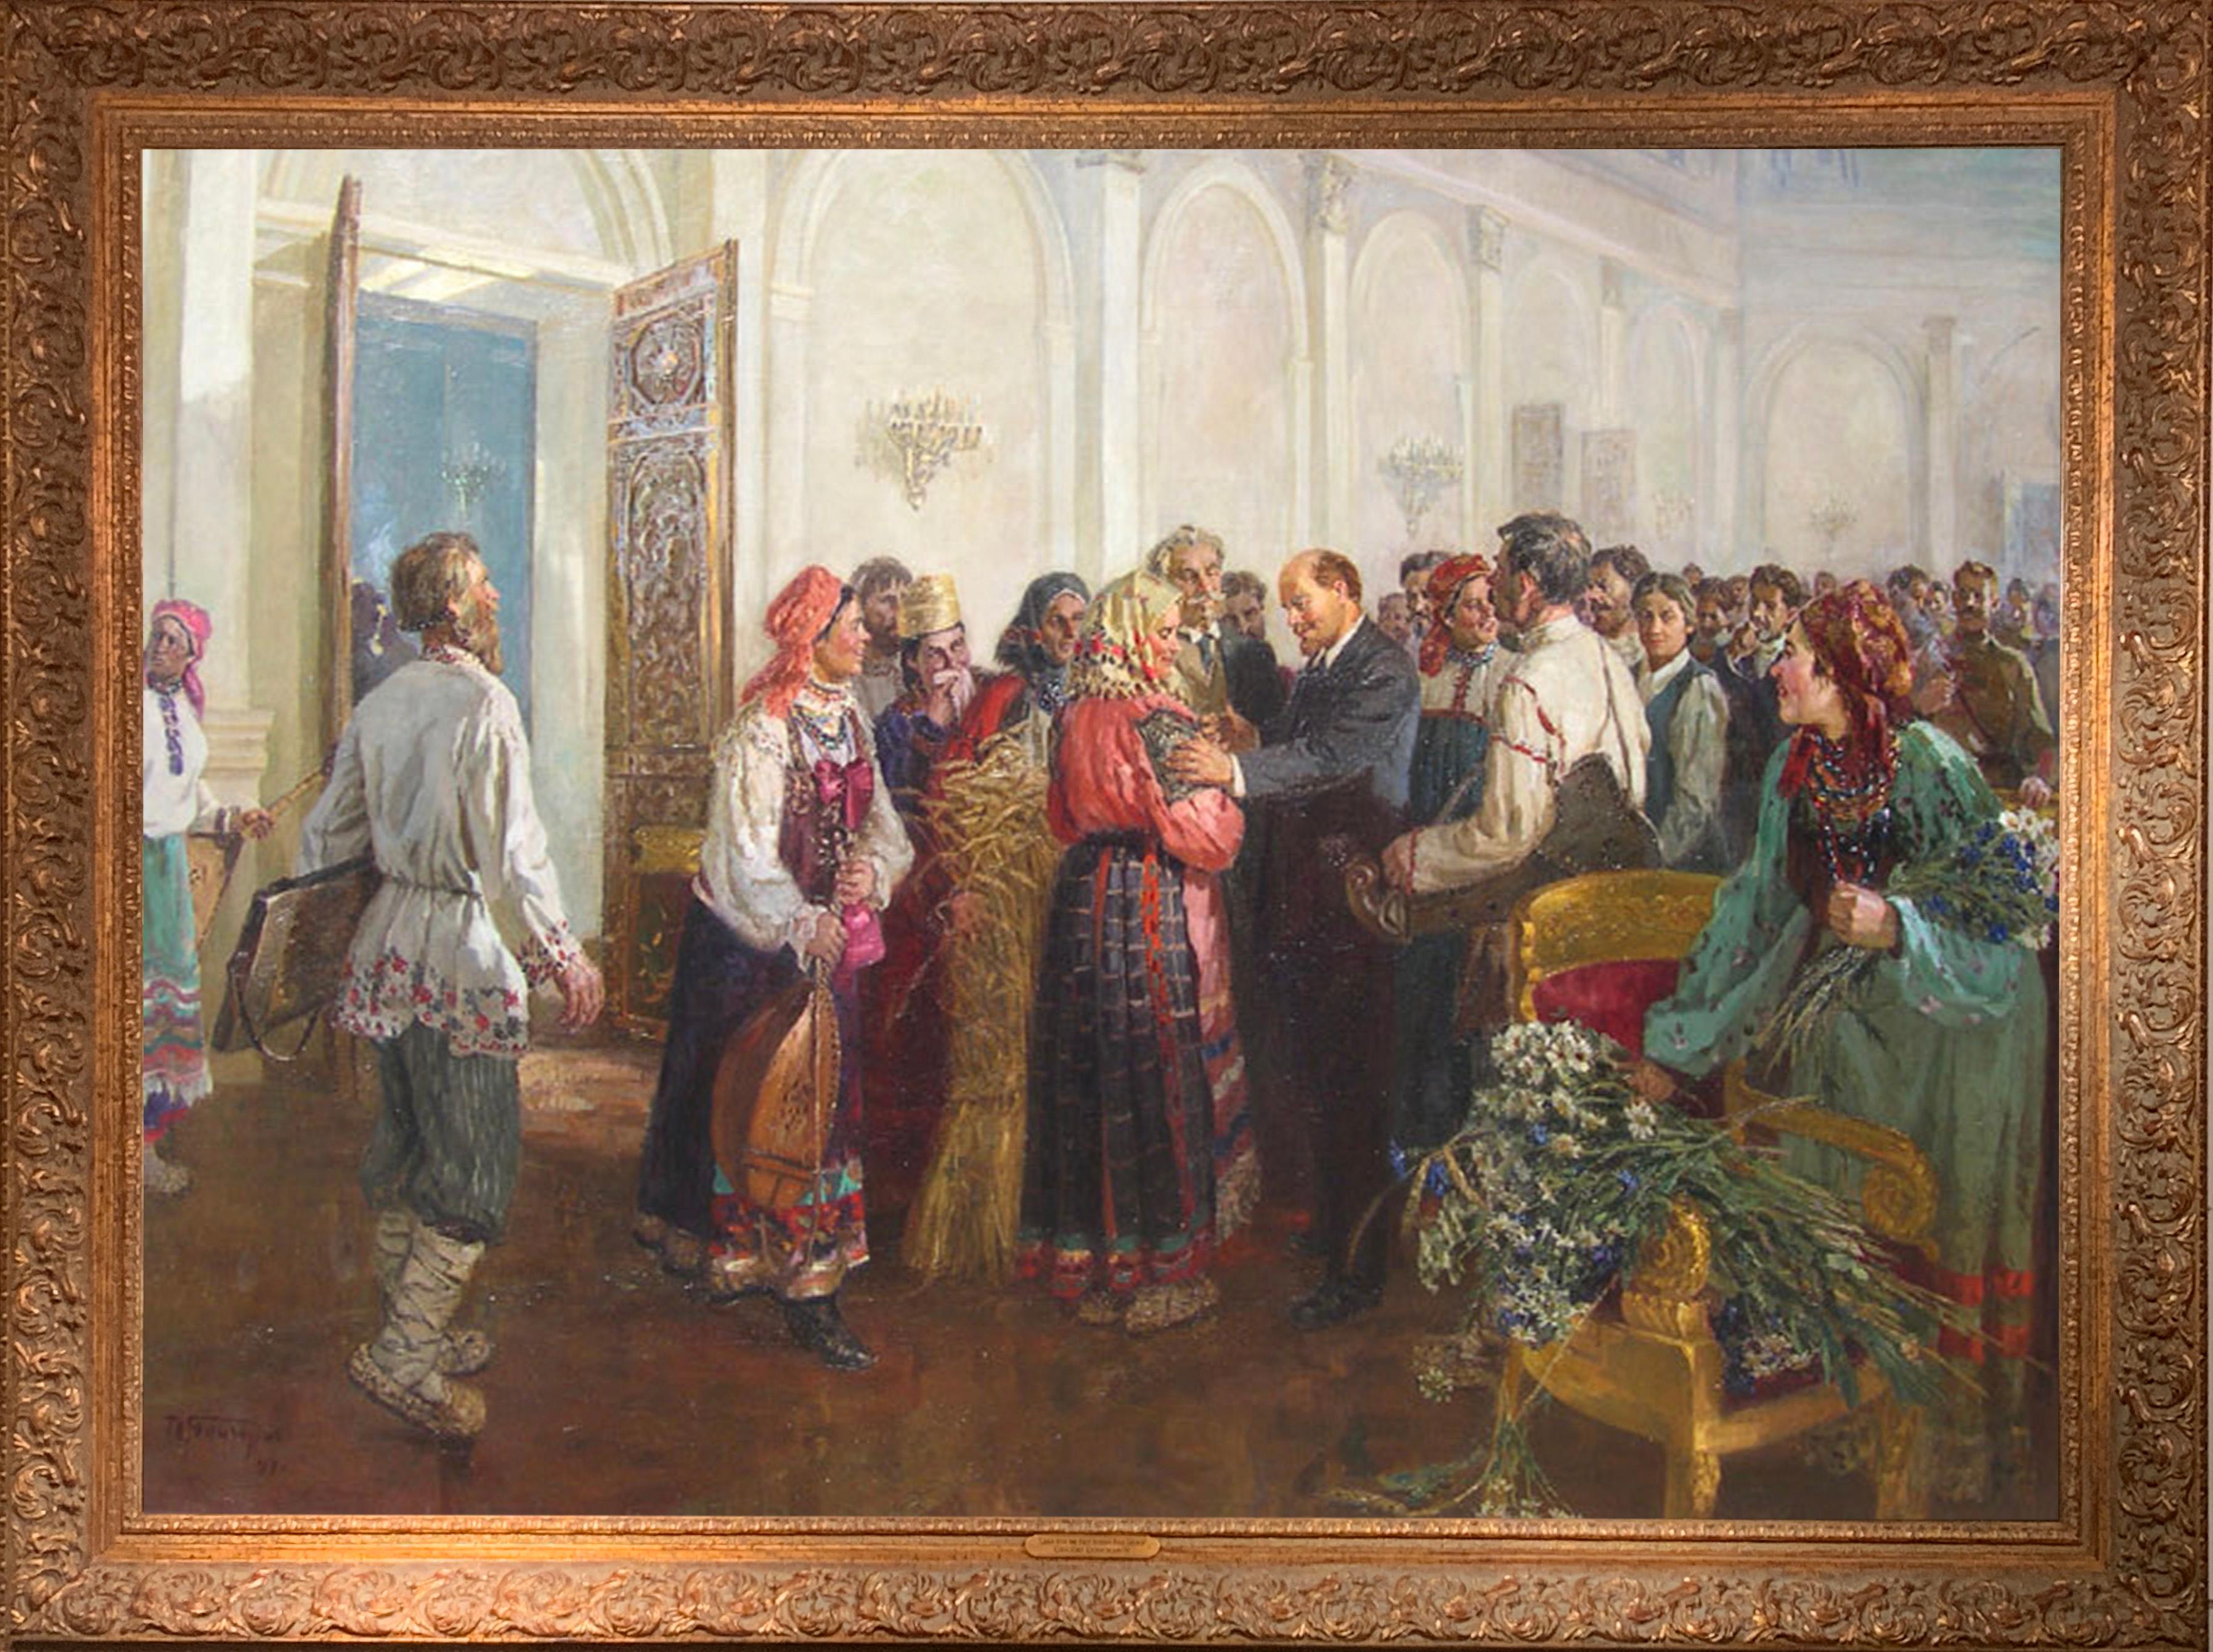 "Levin w/ First Russian Folk Chorus", Gregori Goncharov, Russian Impressionist